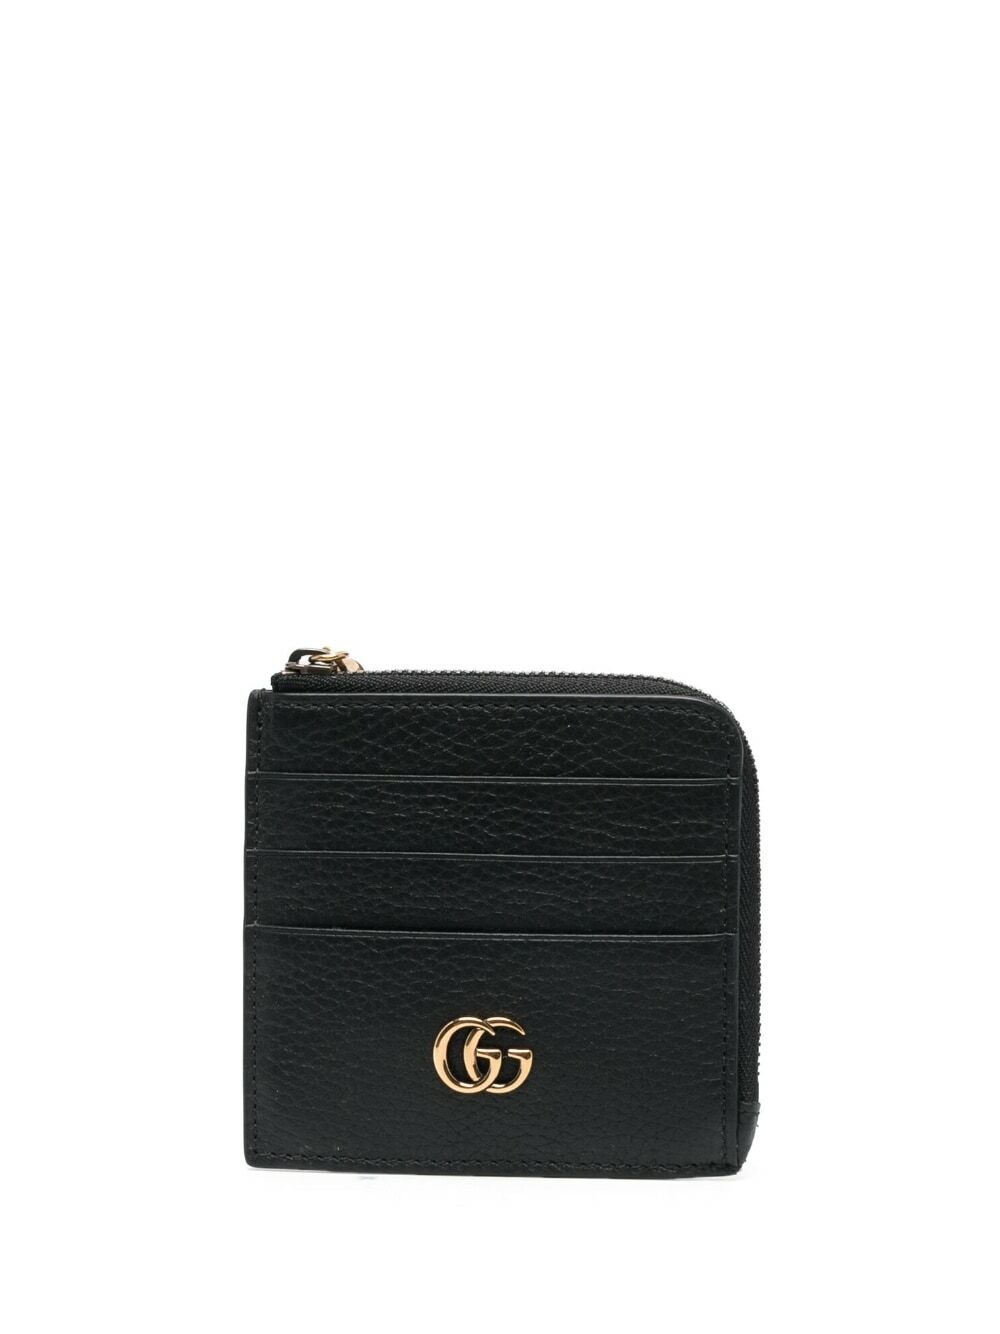 GUCCI - Leather Credit Card Case Gucci